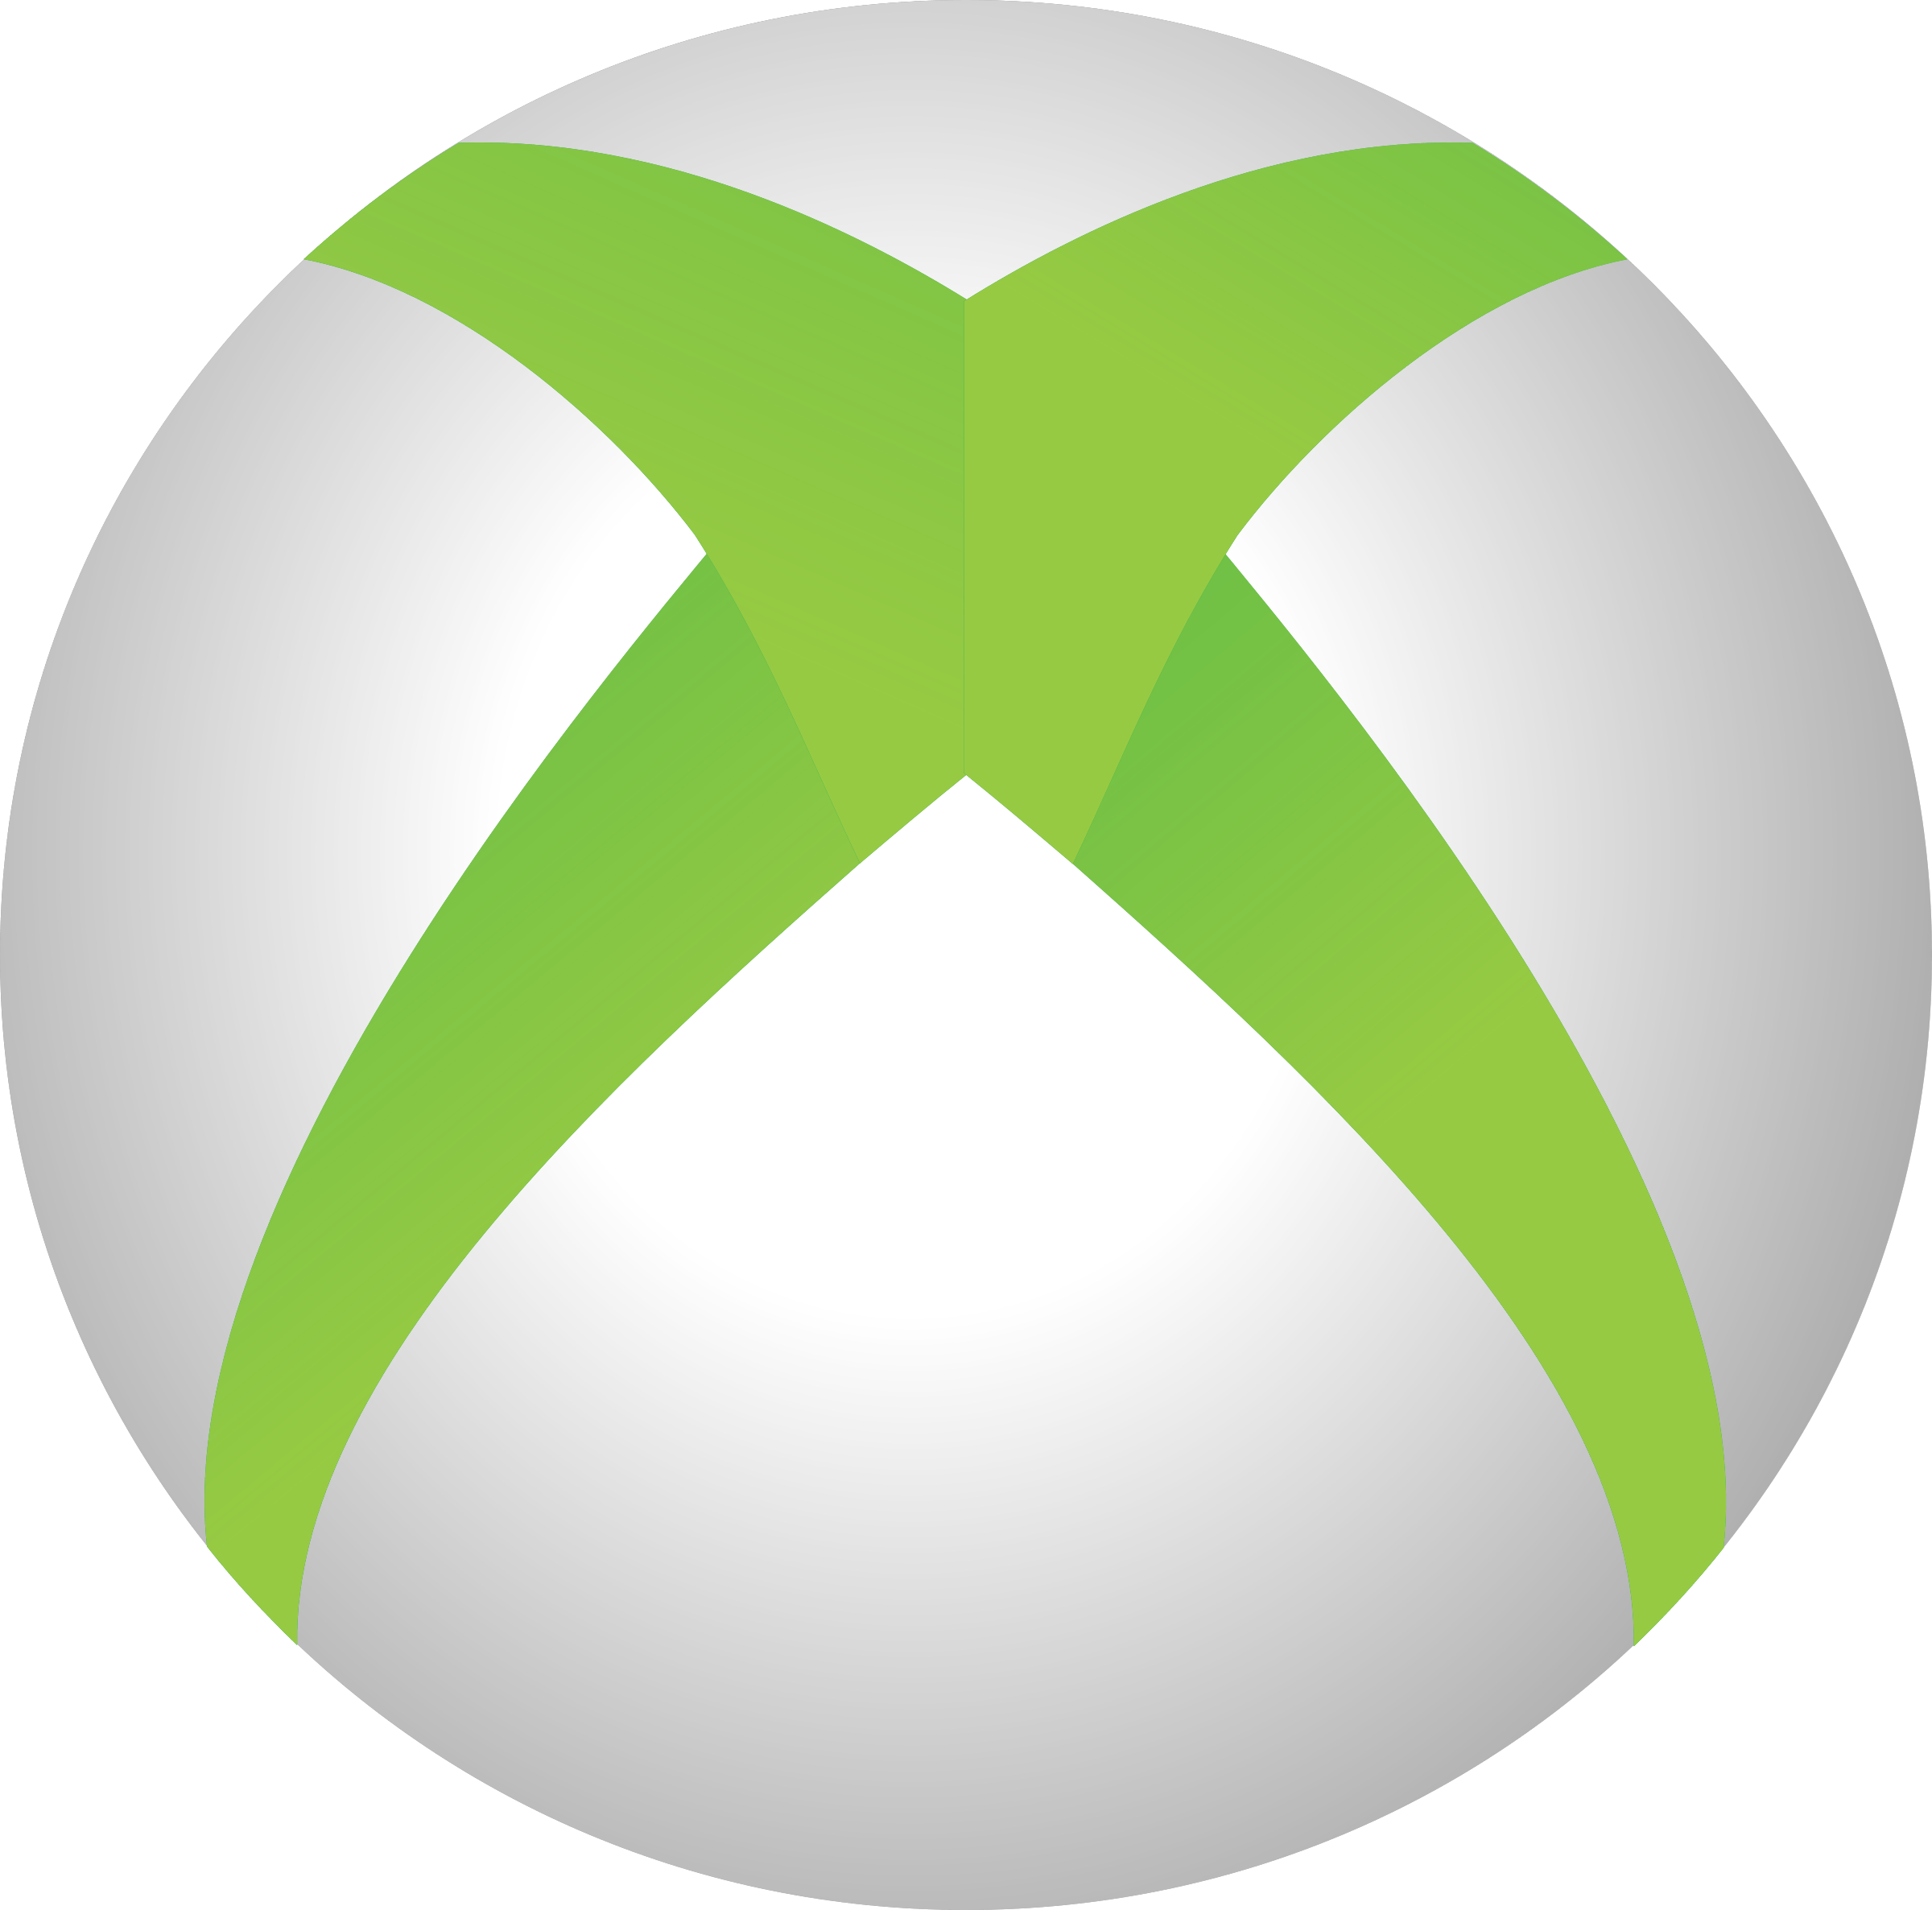 Xbox Logo - Xbox Logo PNG Transparent & SVG Vector - Freebie Supply